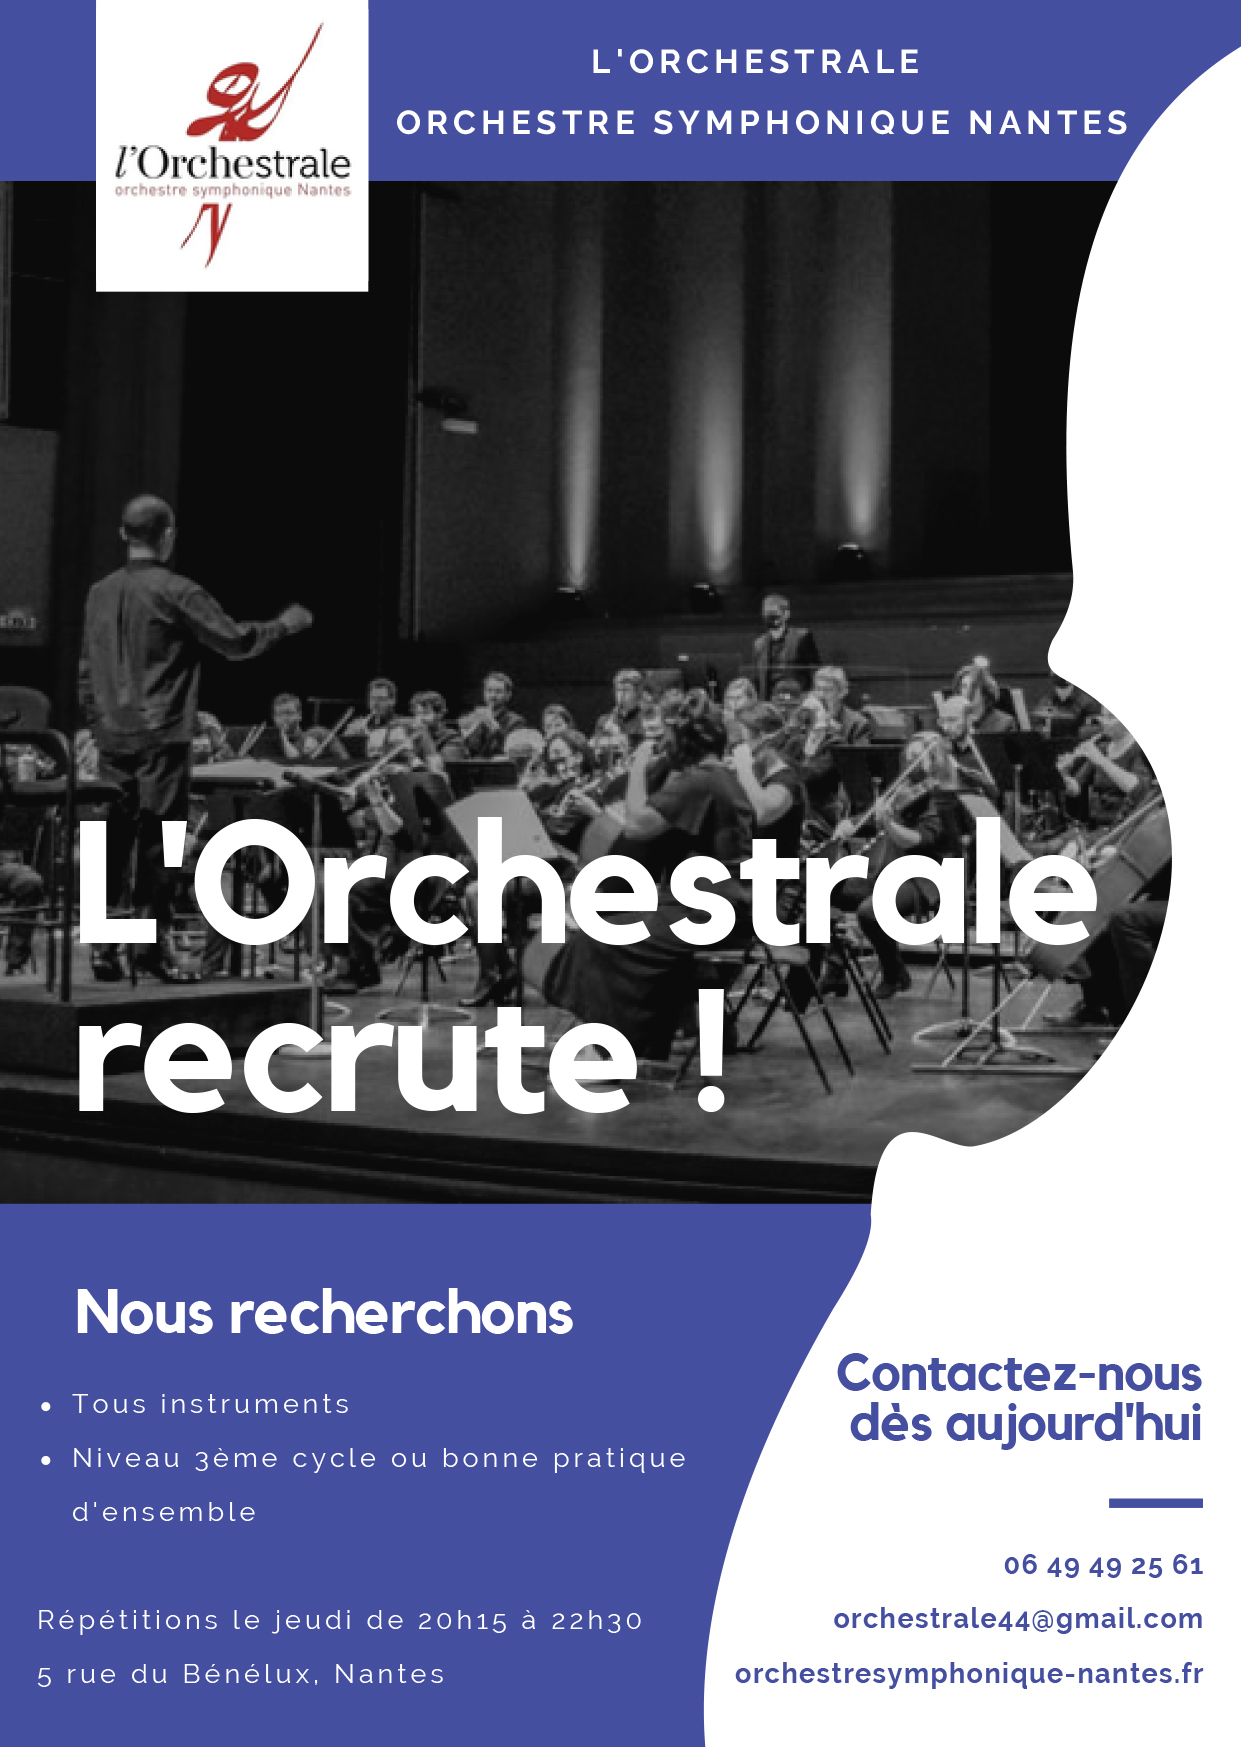 L'Orchestrale recrute